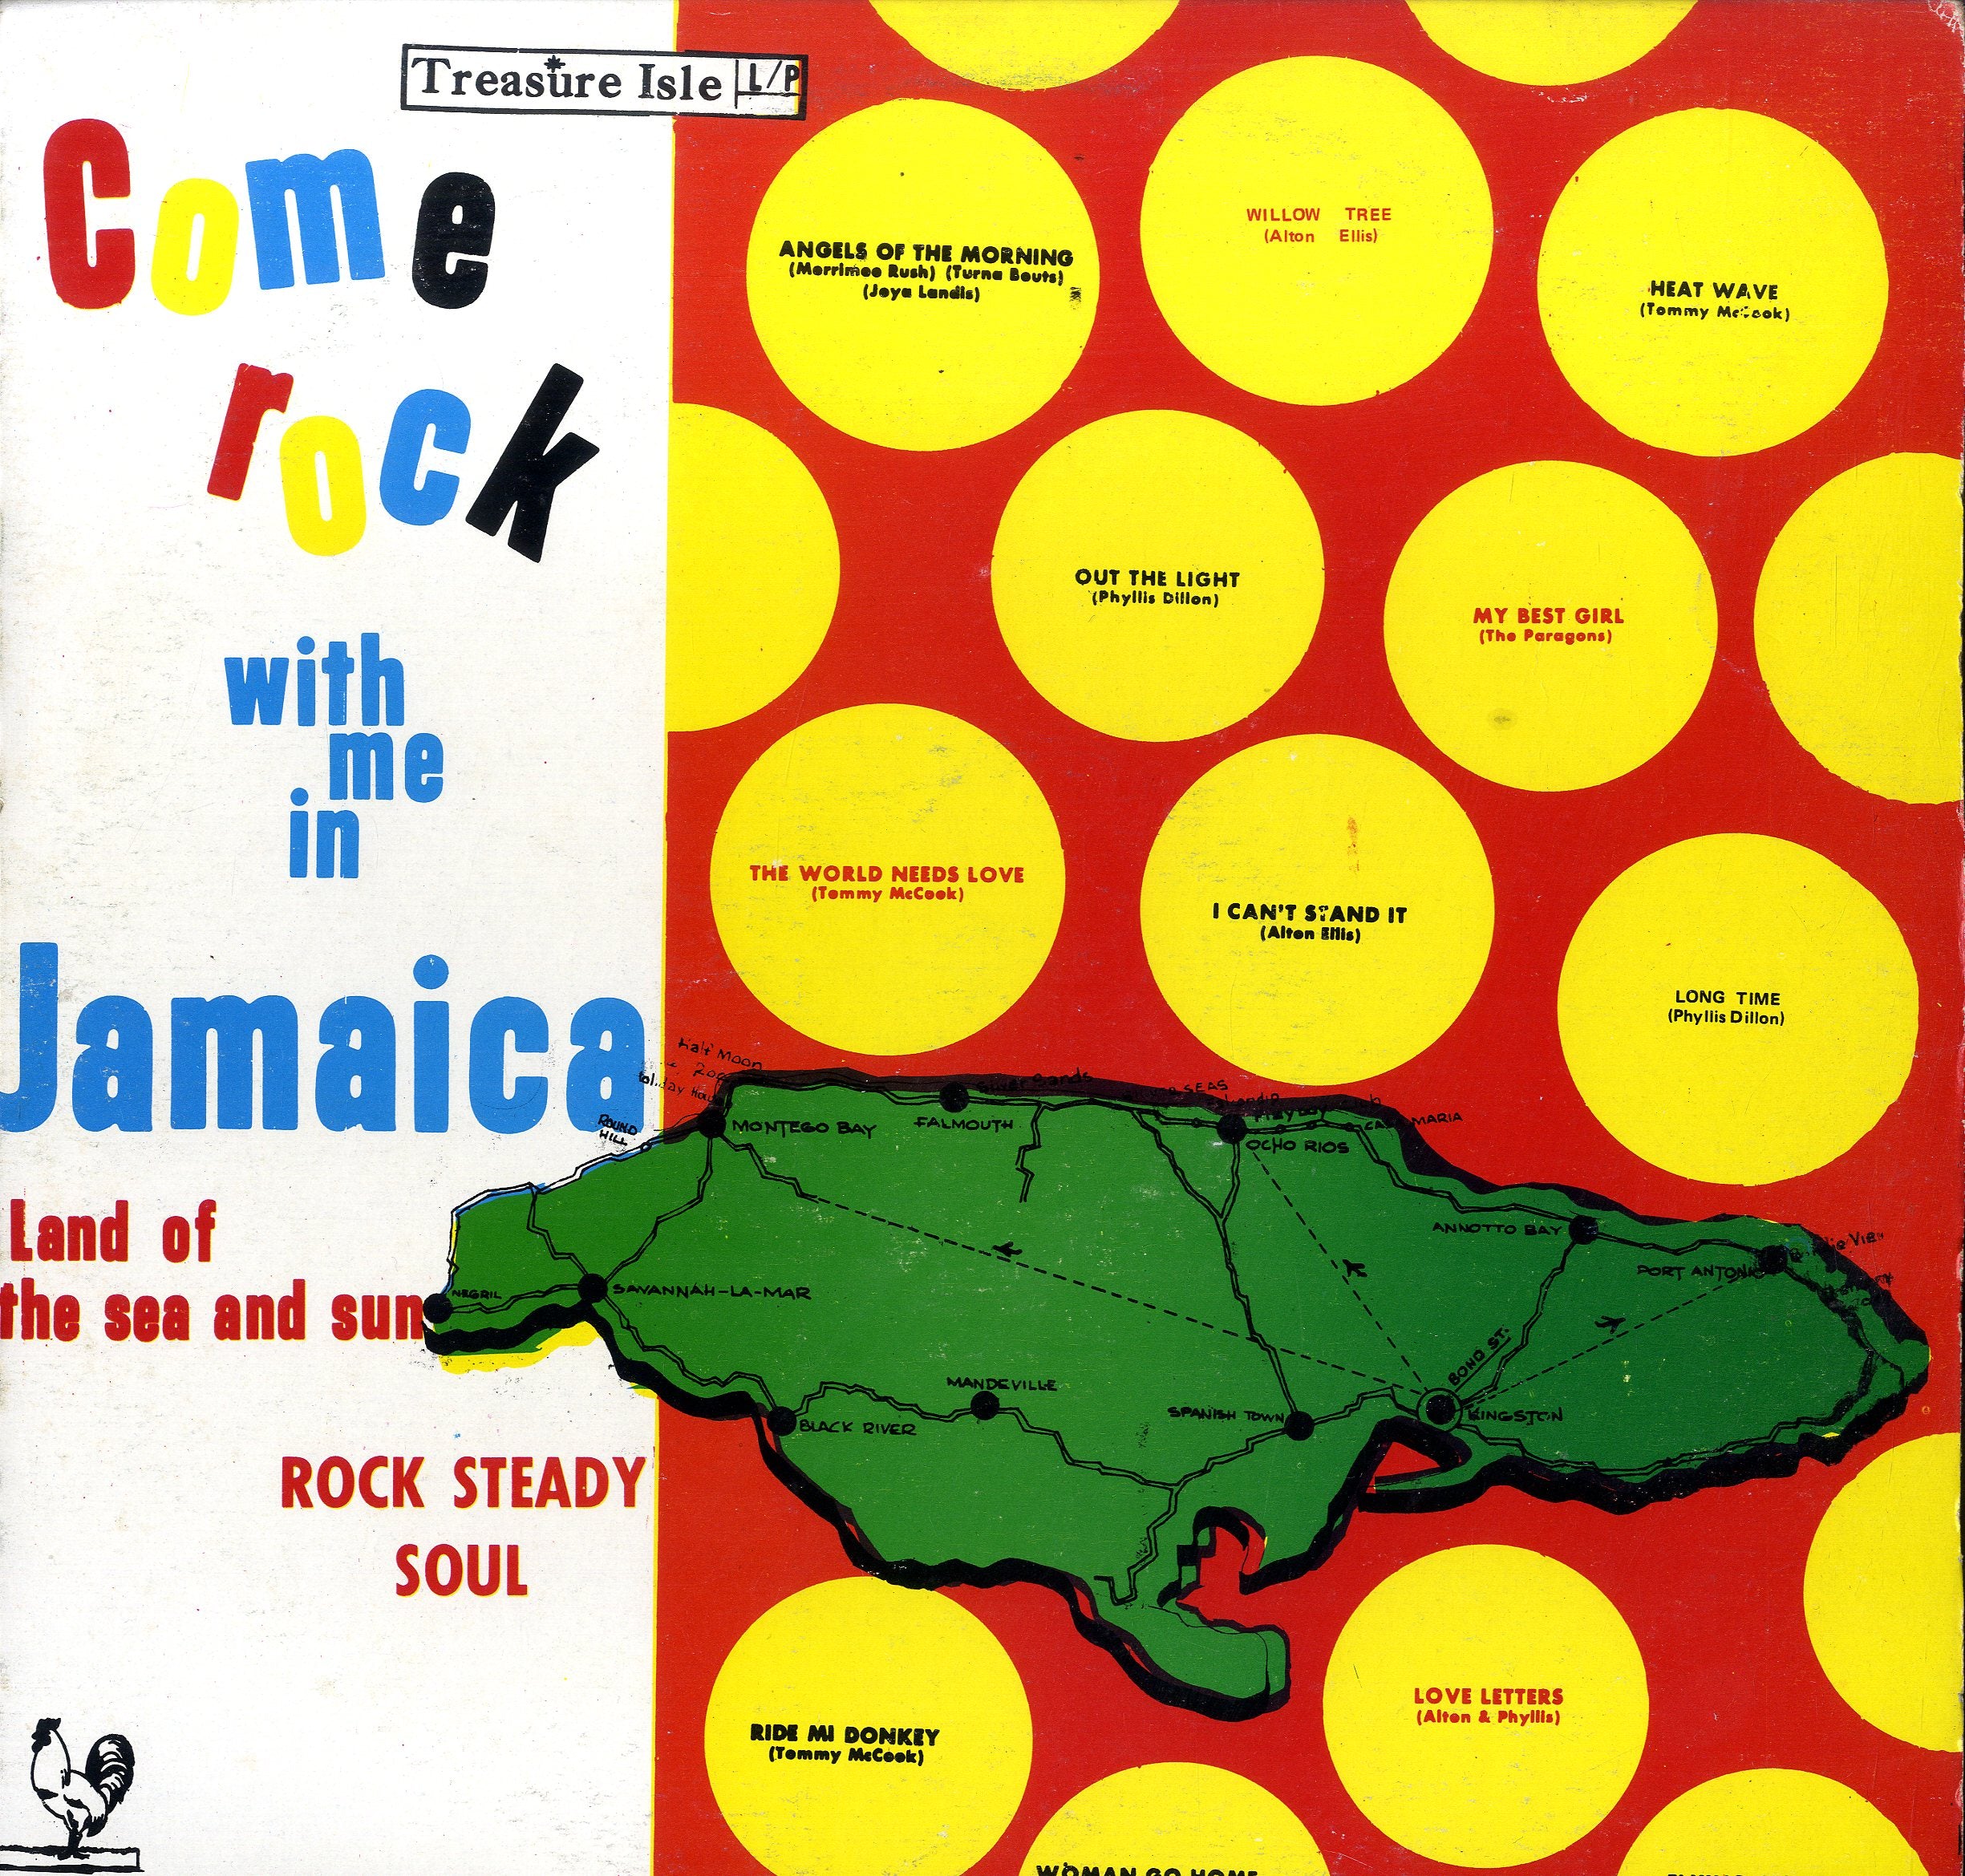 V. A. A. ELLIS, P. DILLON, T. MCCOOK & SUPER SONICS [Come Rock With Me In Jamaica]